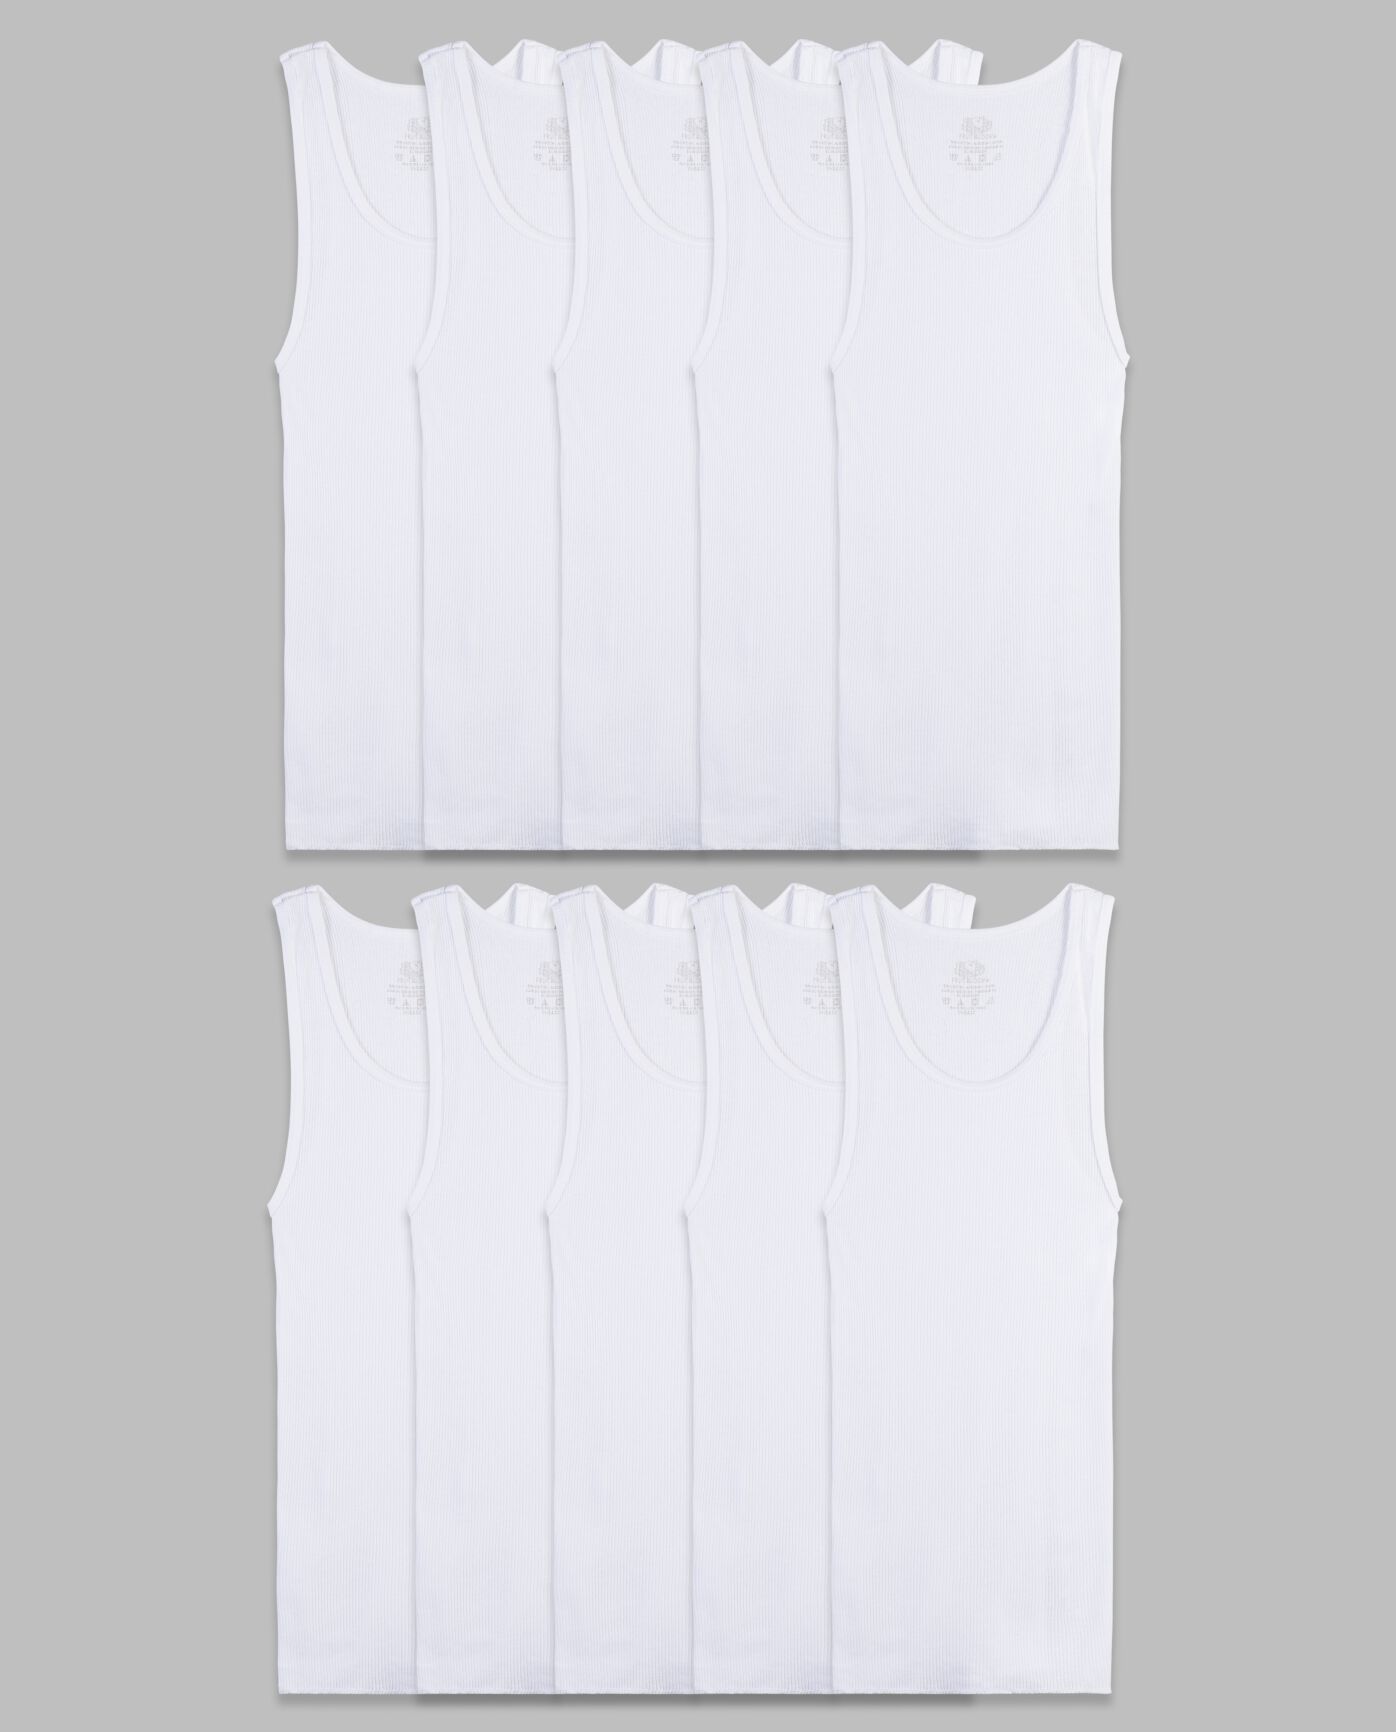 Toddler Boys' Tank Undershirt, White 10 Pack White